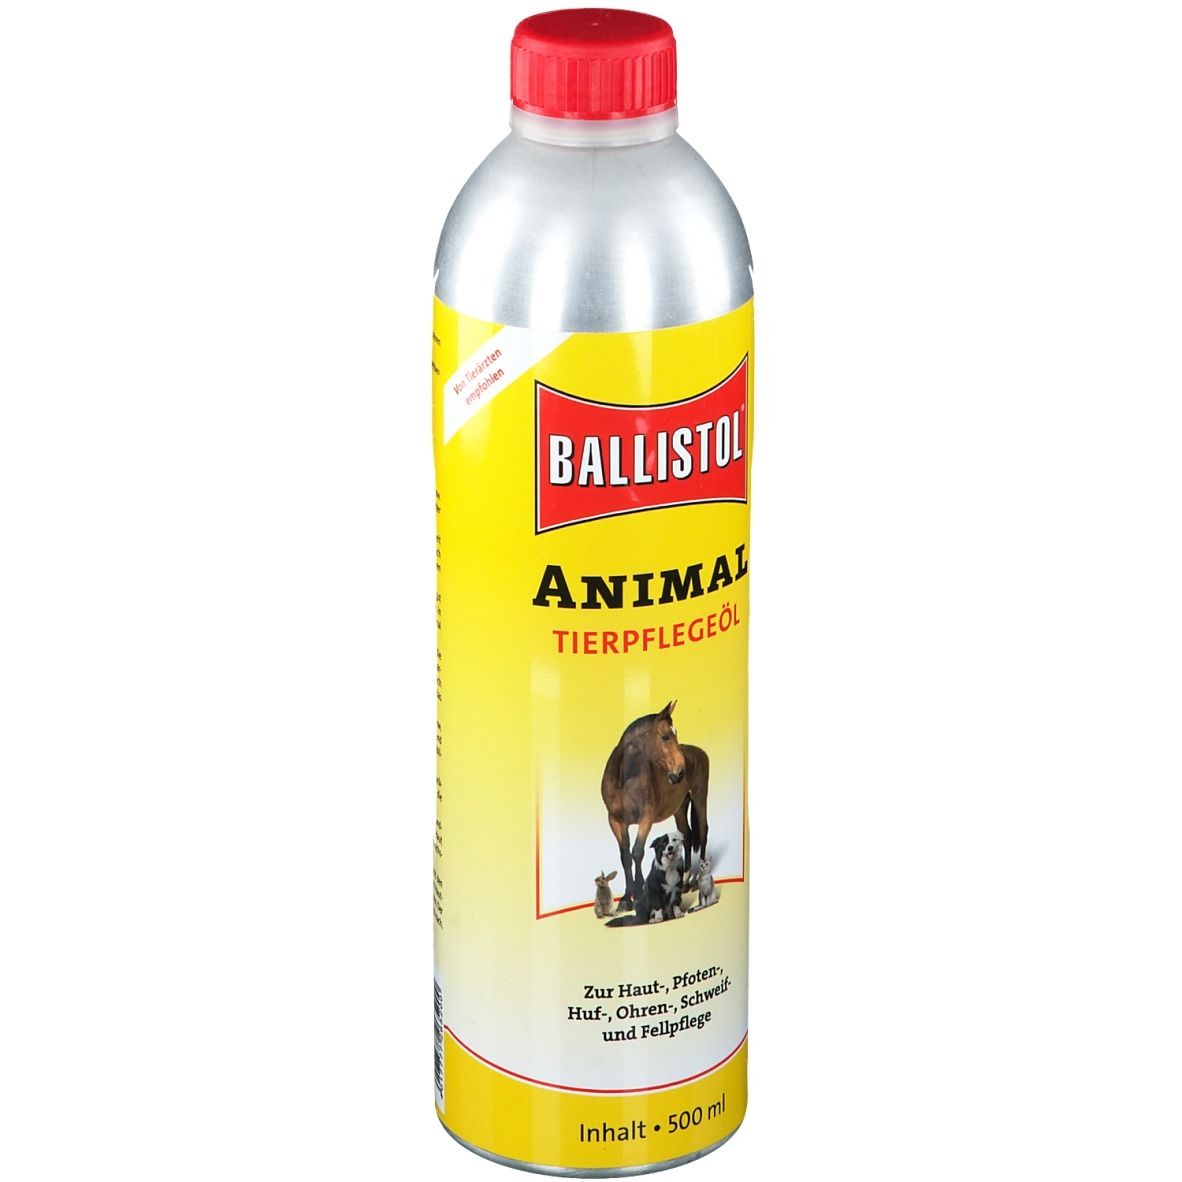 ballistol animal anwendung hund